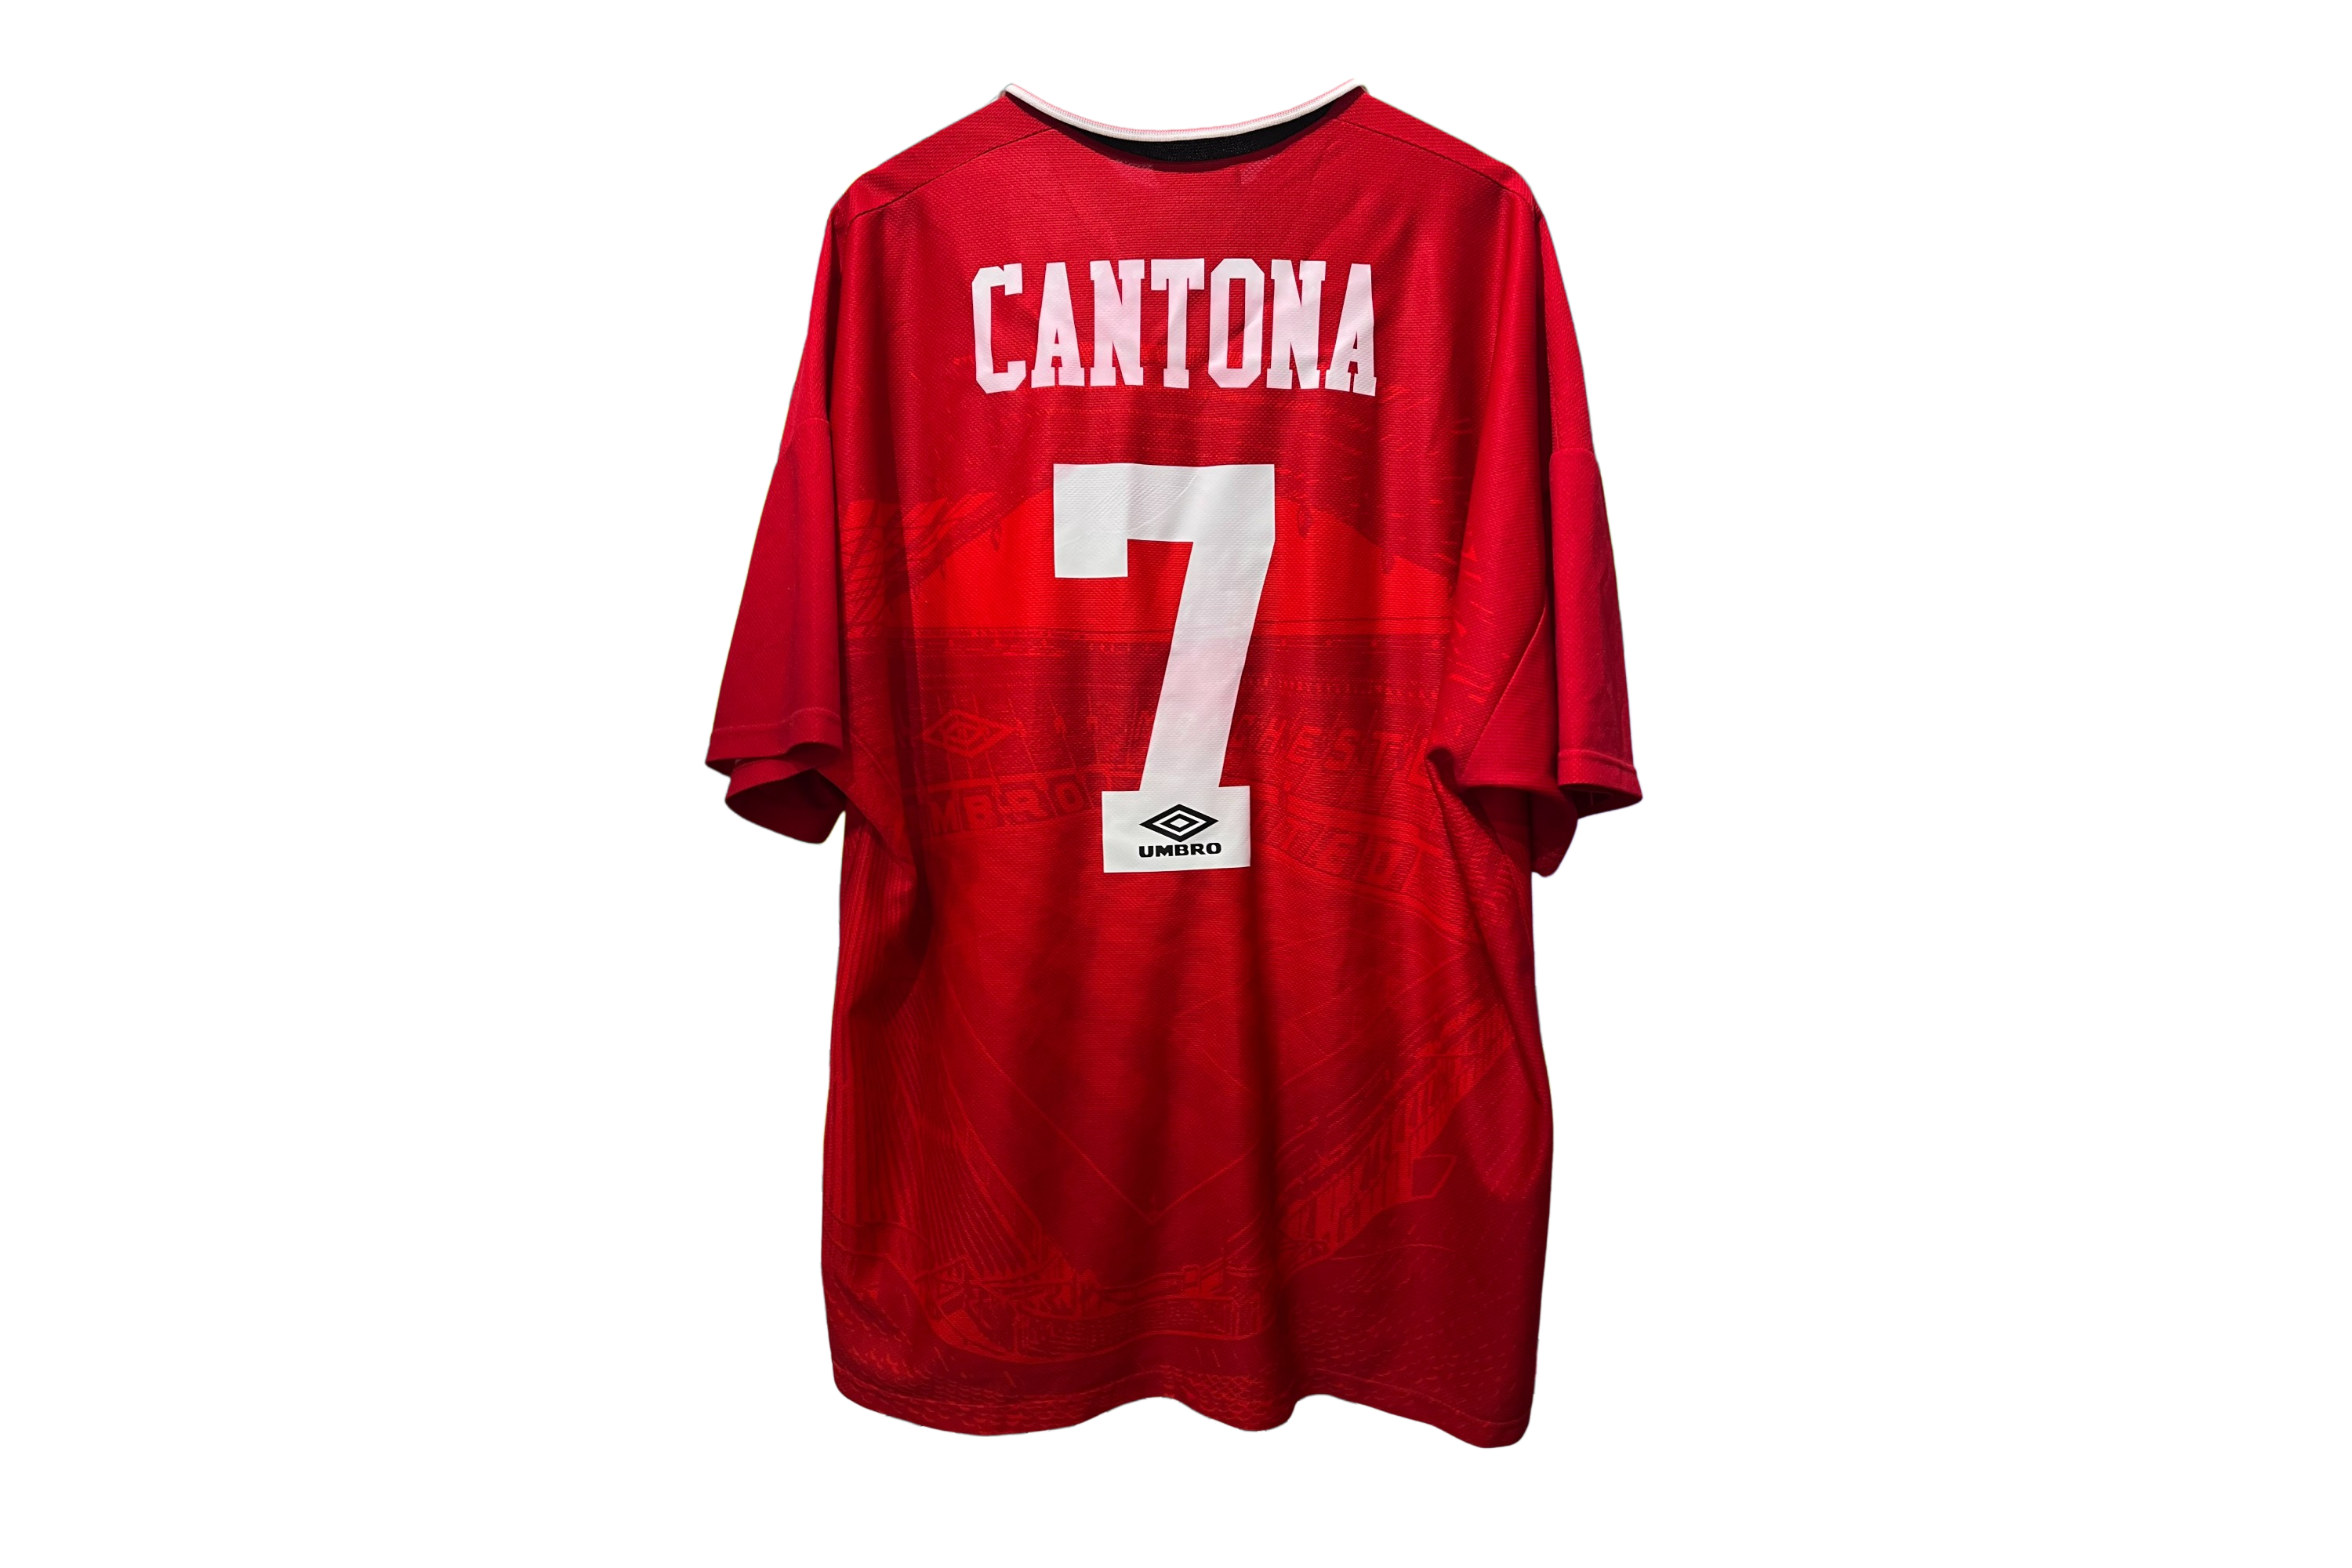 Umbro - Manchester United 1995/96 Home Football Shirt 'CANTONA'